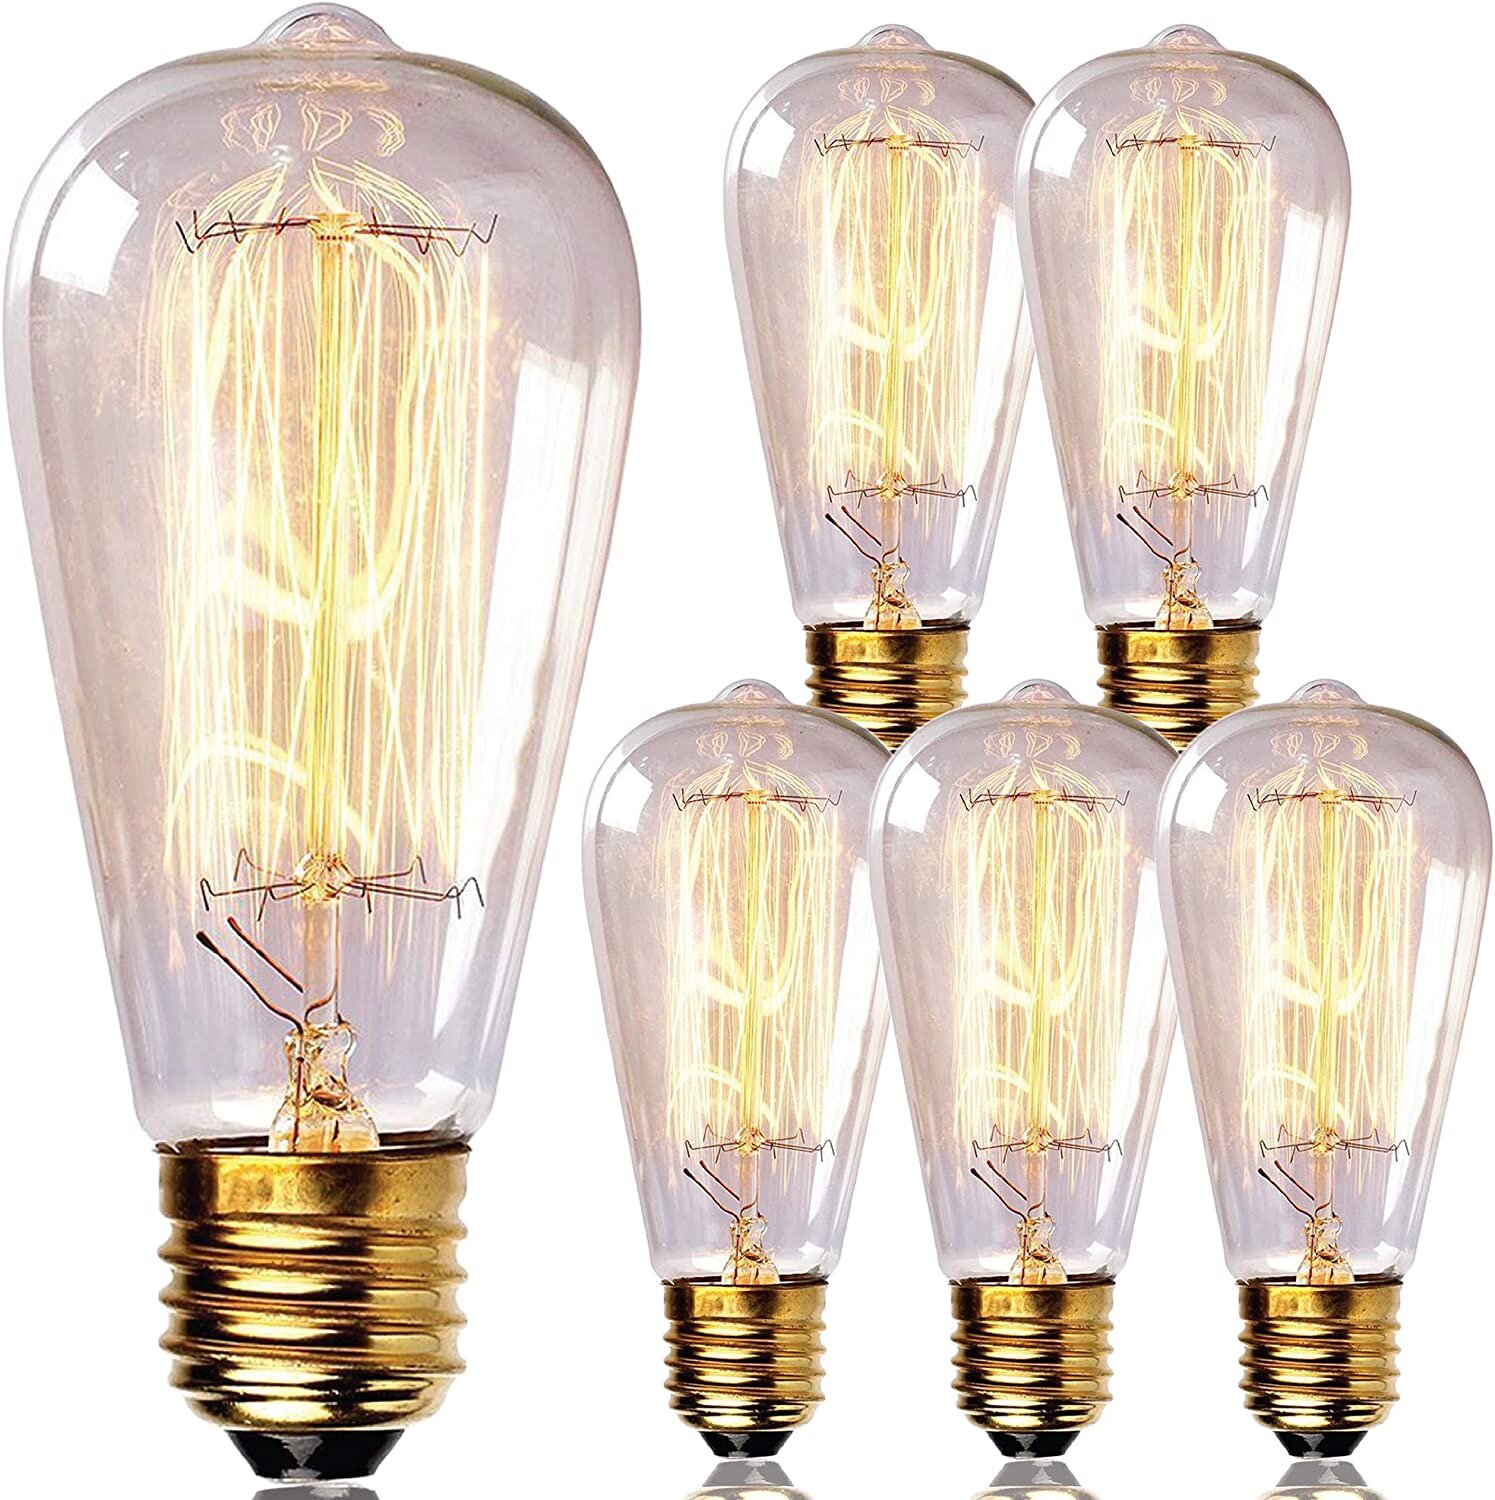 3 x EASYDIM Light Bulb Unique Special Dimmer Lightbulb Lamp Plug-in 60w UK Stock 